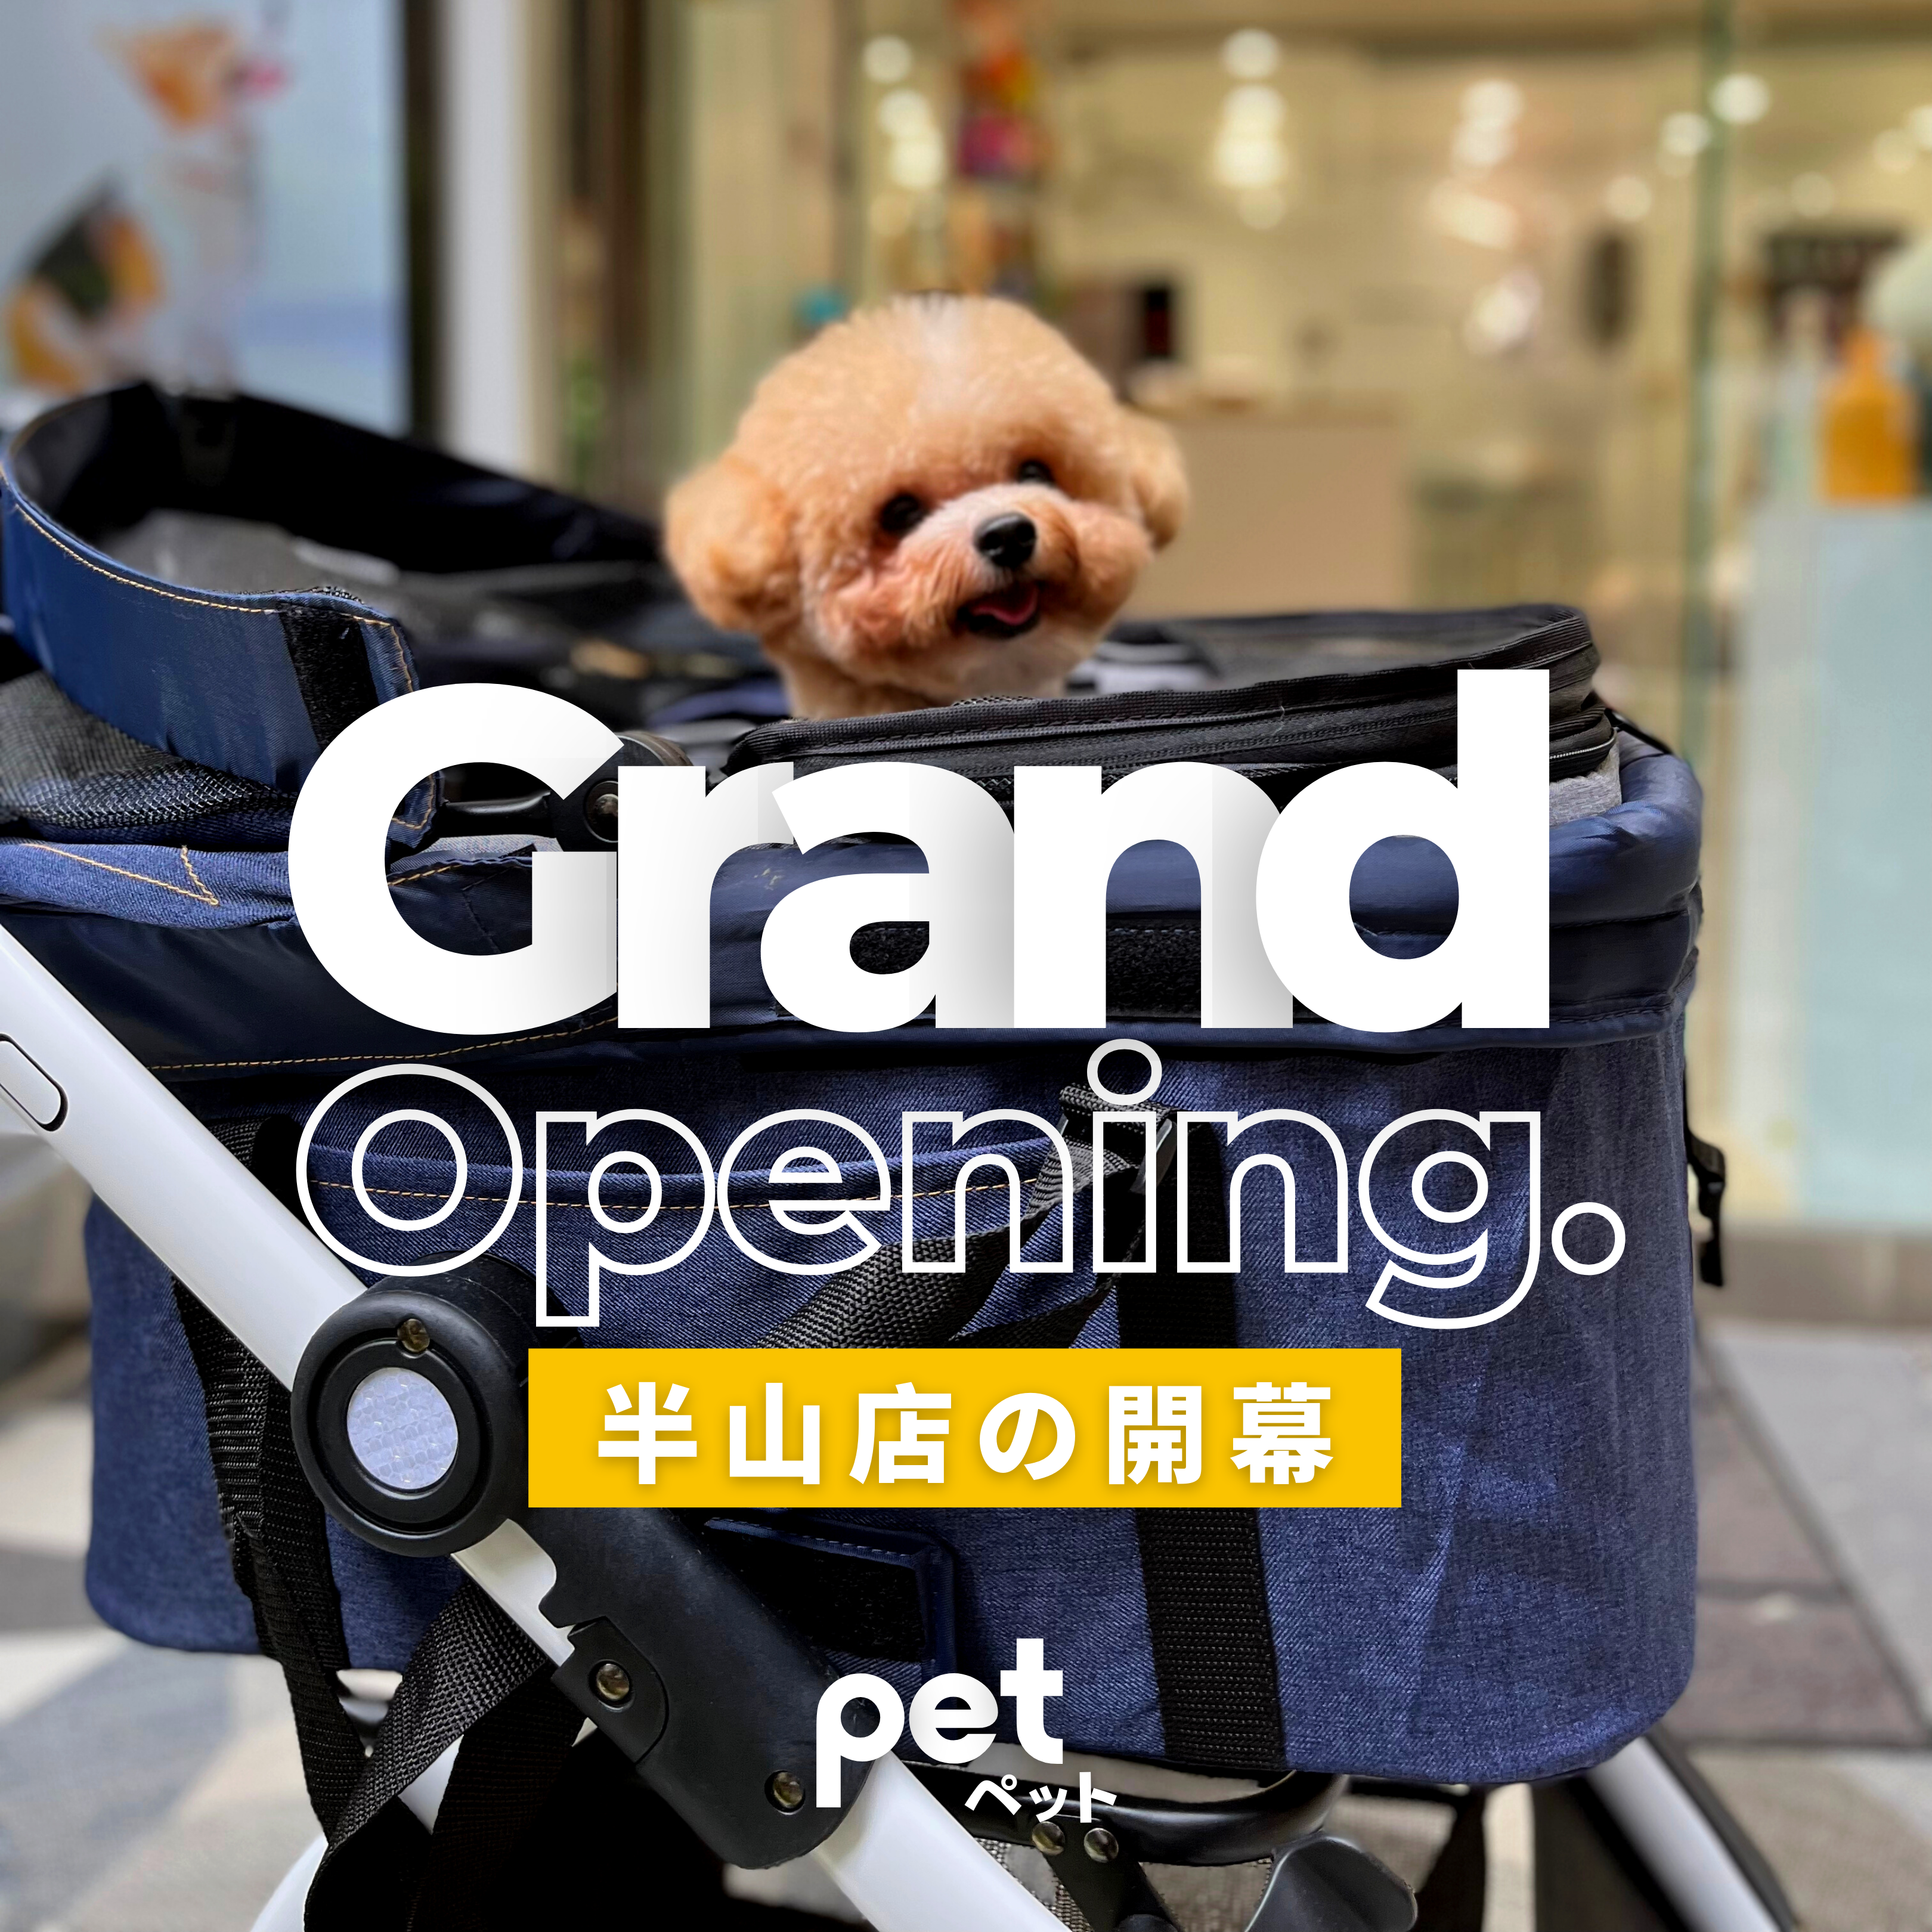 pet hk 半山寵物店 -  Mid Levels Edition 本著熱愛毛孩的心情，我們提供一系列獨特精選的優質寵物用品，和細心舒適的寵物美容服務。在這個寧靜和充滿現代簡約設計感的角落，帶你的毛孩來散一次輕鬆的步，來一個PET SALON DAY，挑選令寵物興奮的新零食和玩具，來一個說sit就sit的訓練之旅。半山店還有送遞上門服務、專車接送等貼心服務，方便你跟主子漫步半山。期望你在𝘔𝘪𝘥-𝘓𝘦𝘷𝘦𝘭𝘴 𝘌𝘥𝘪𝘵𝘪𝘰𝘯裡會有一次愉快的PET體驗 !